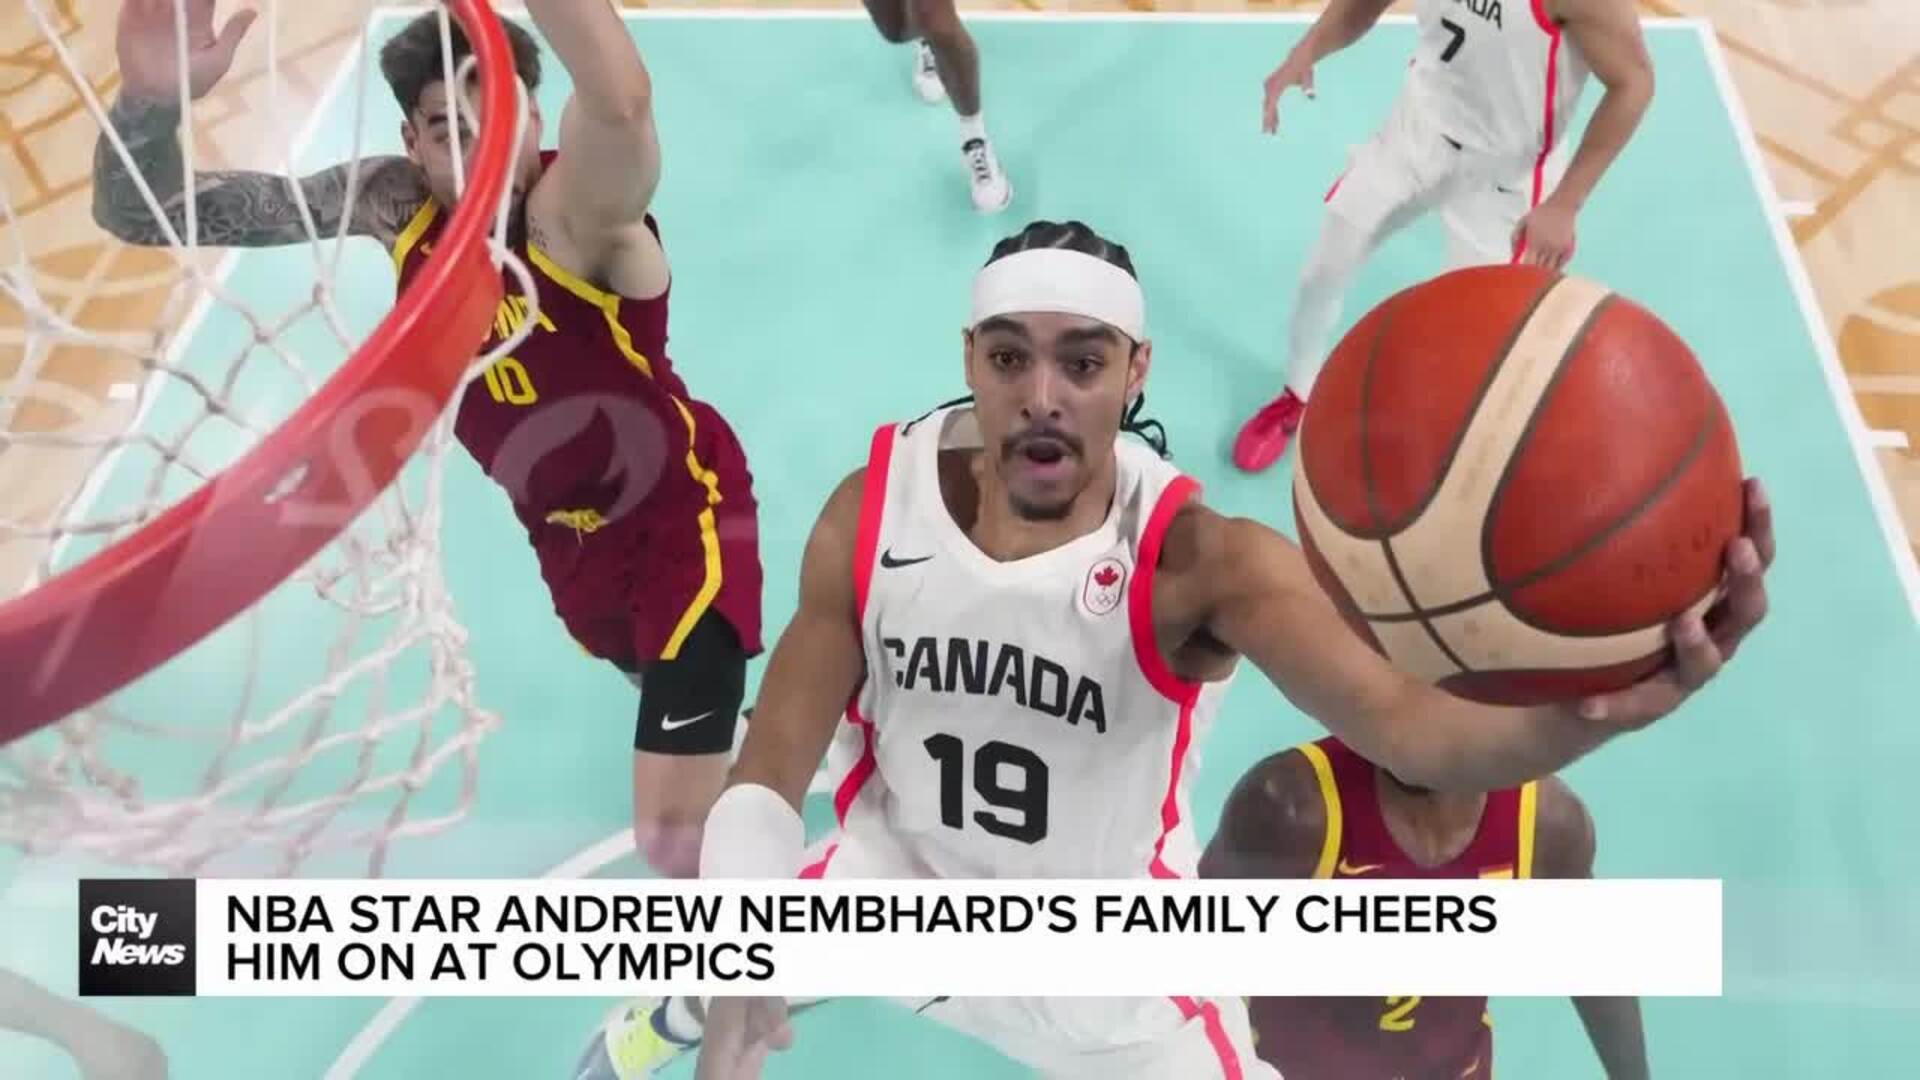 NBA star Andrew Nembhard shining at Olympics